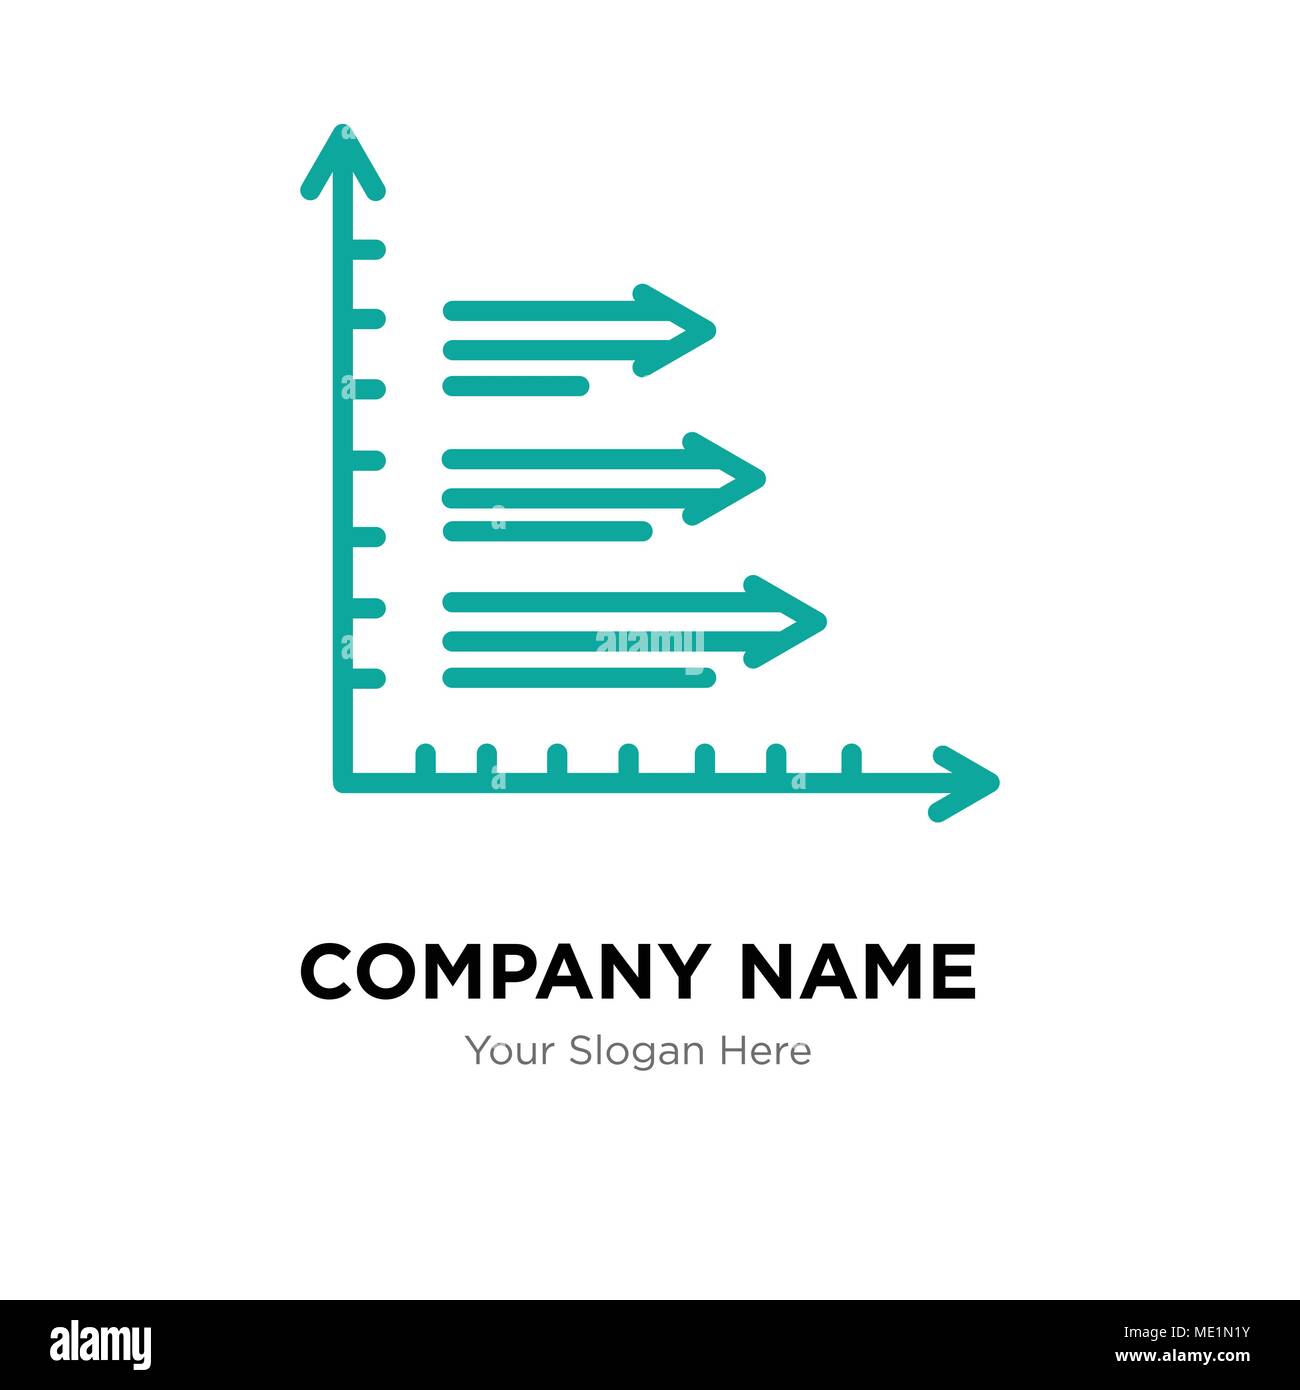 Bars company logo design template, Business corporate vector icon Stock Vector